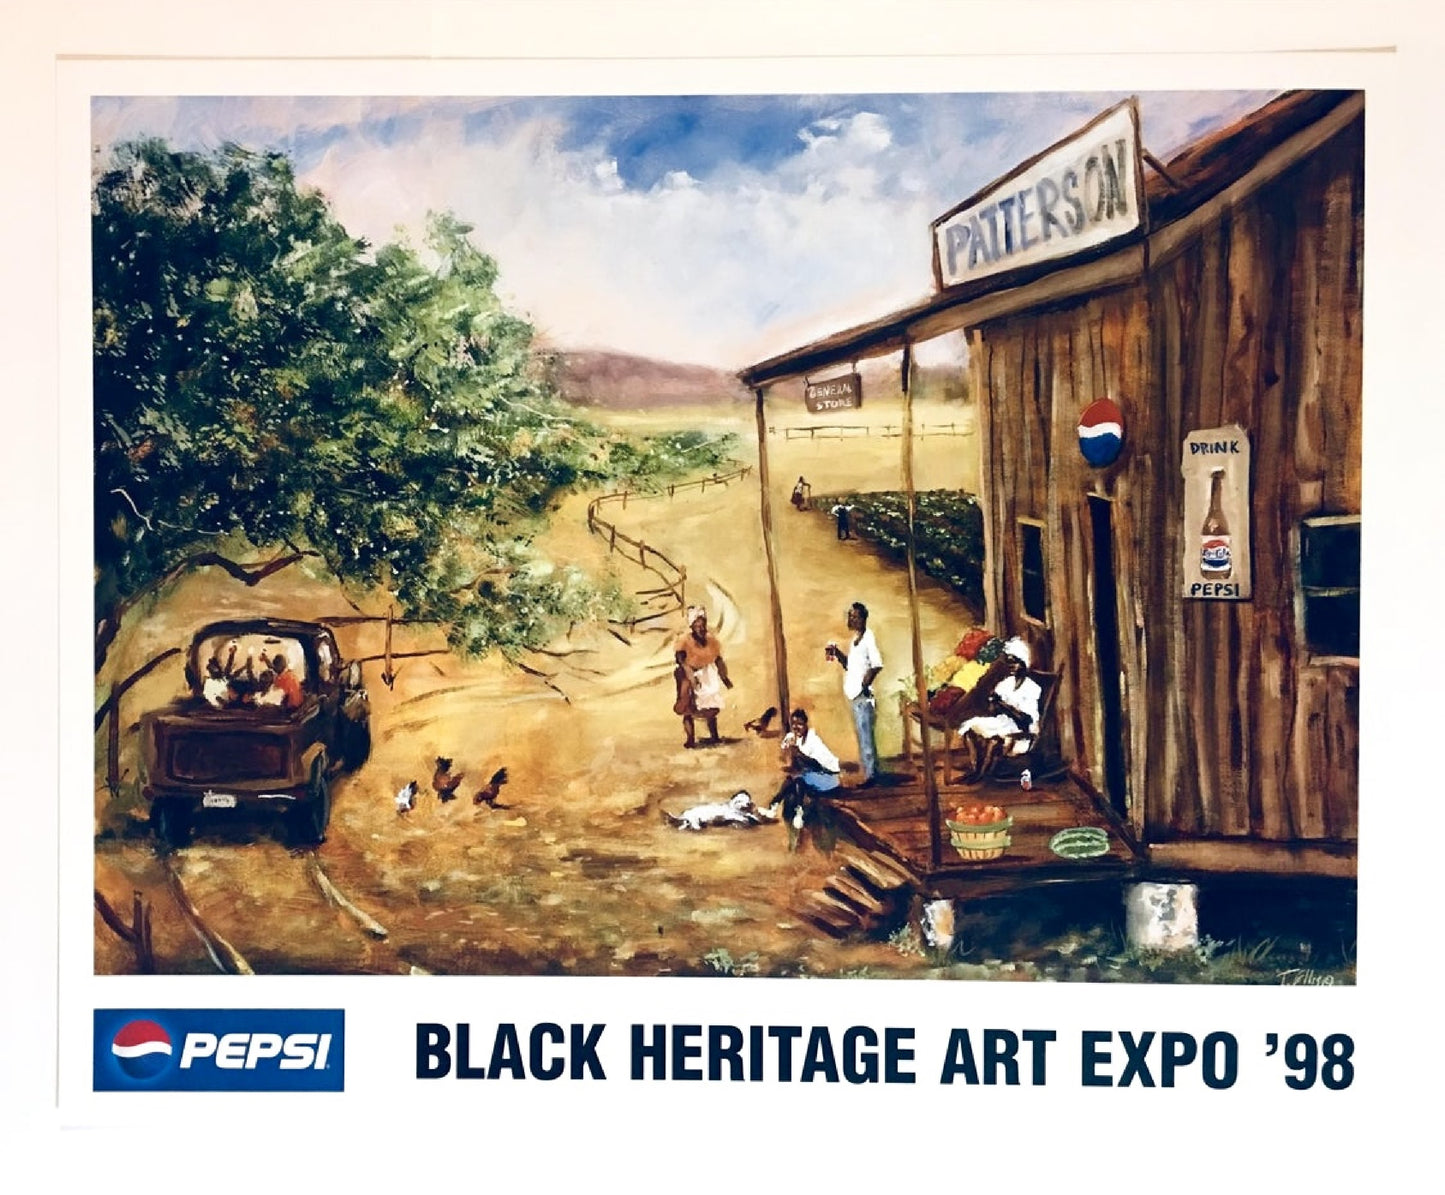 T Ellis “Patterson General Store” Pepsi Theme Poster Print for the 1998 Black Heritage Art Expo